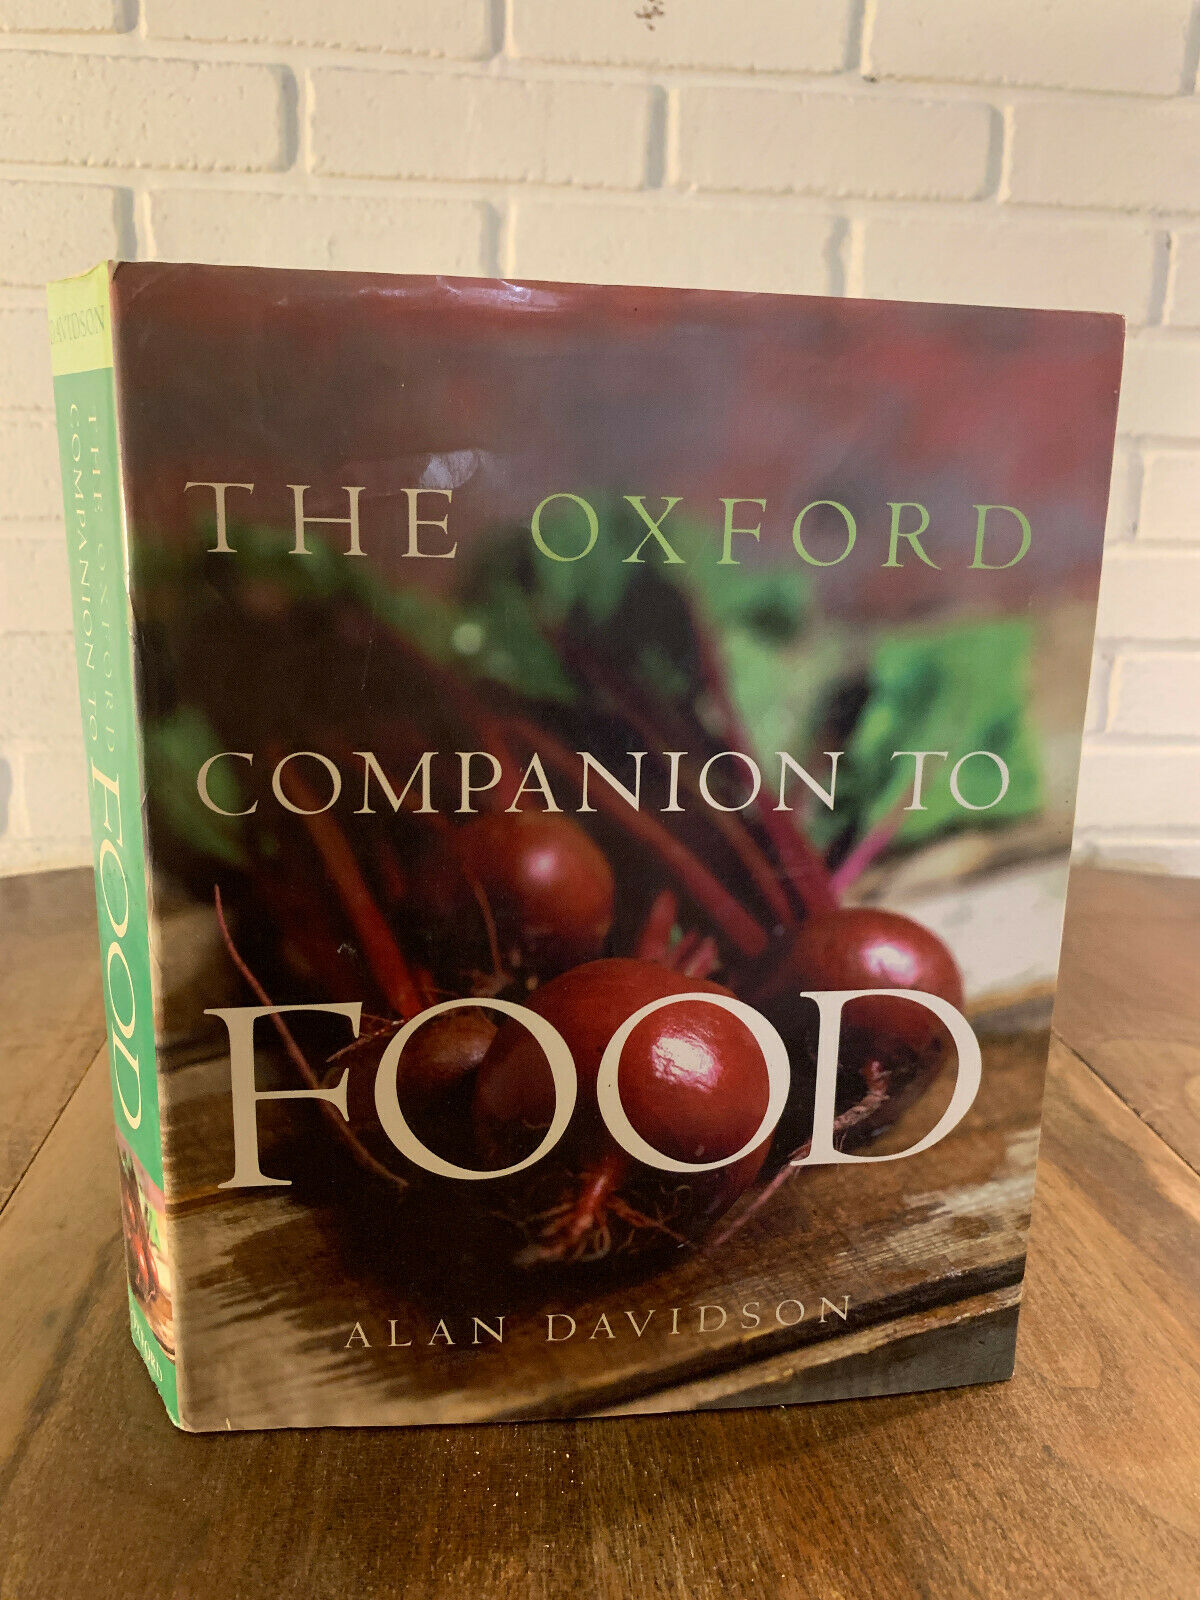 The Oxford Companion to Food by Alan Davidson, 1999